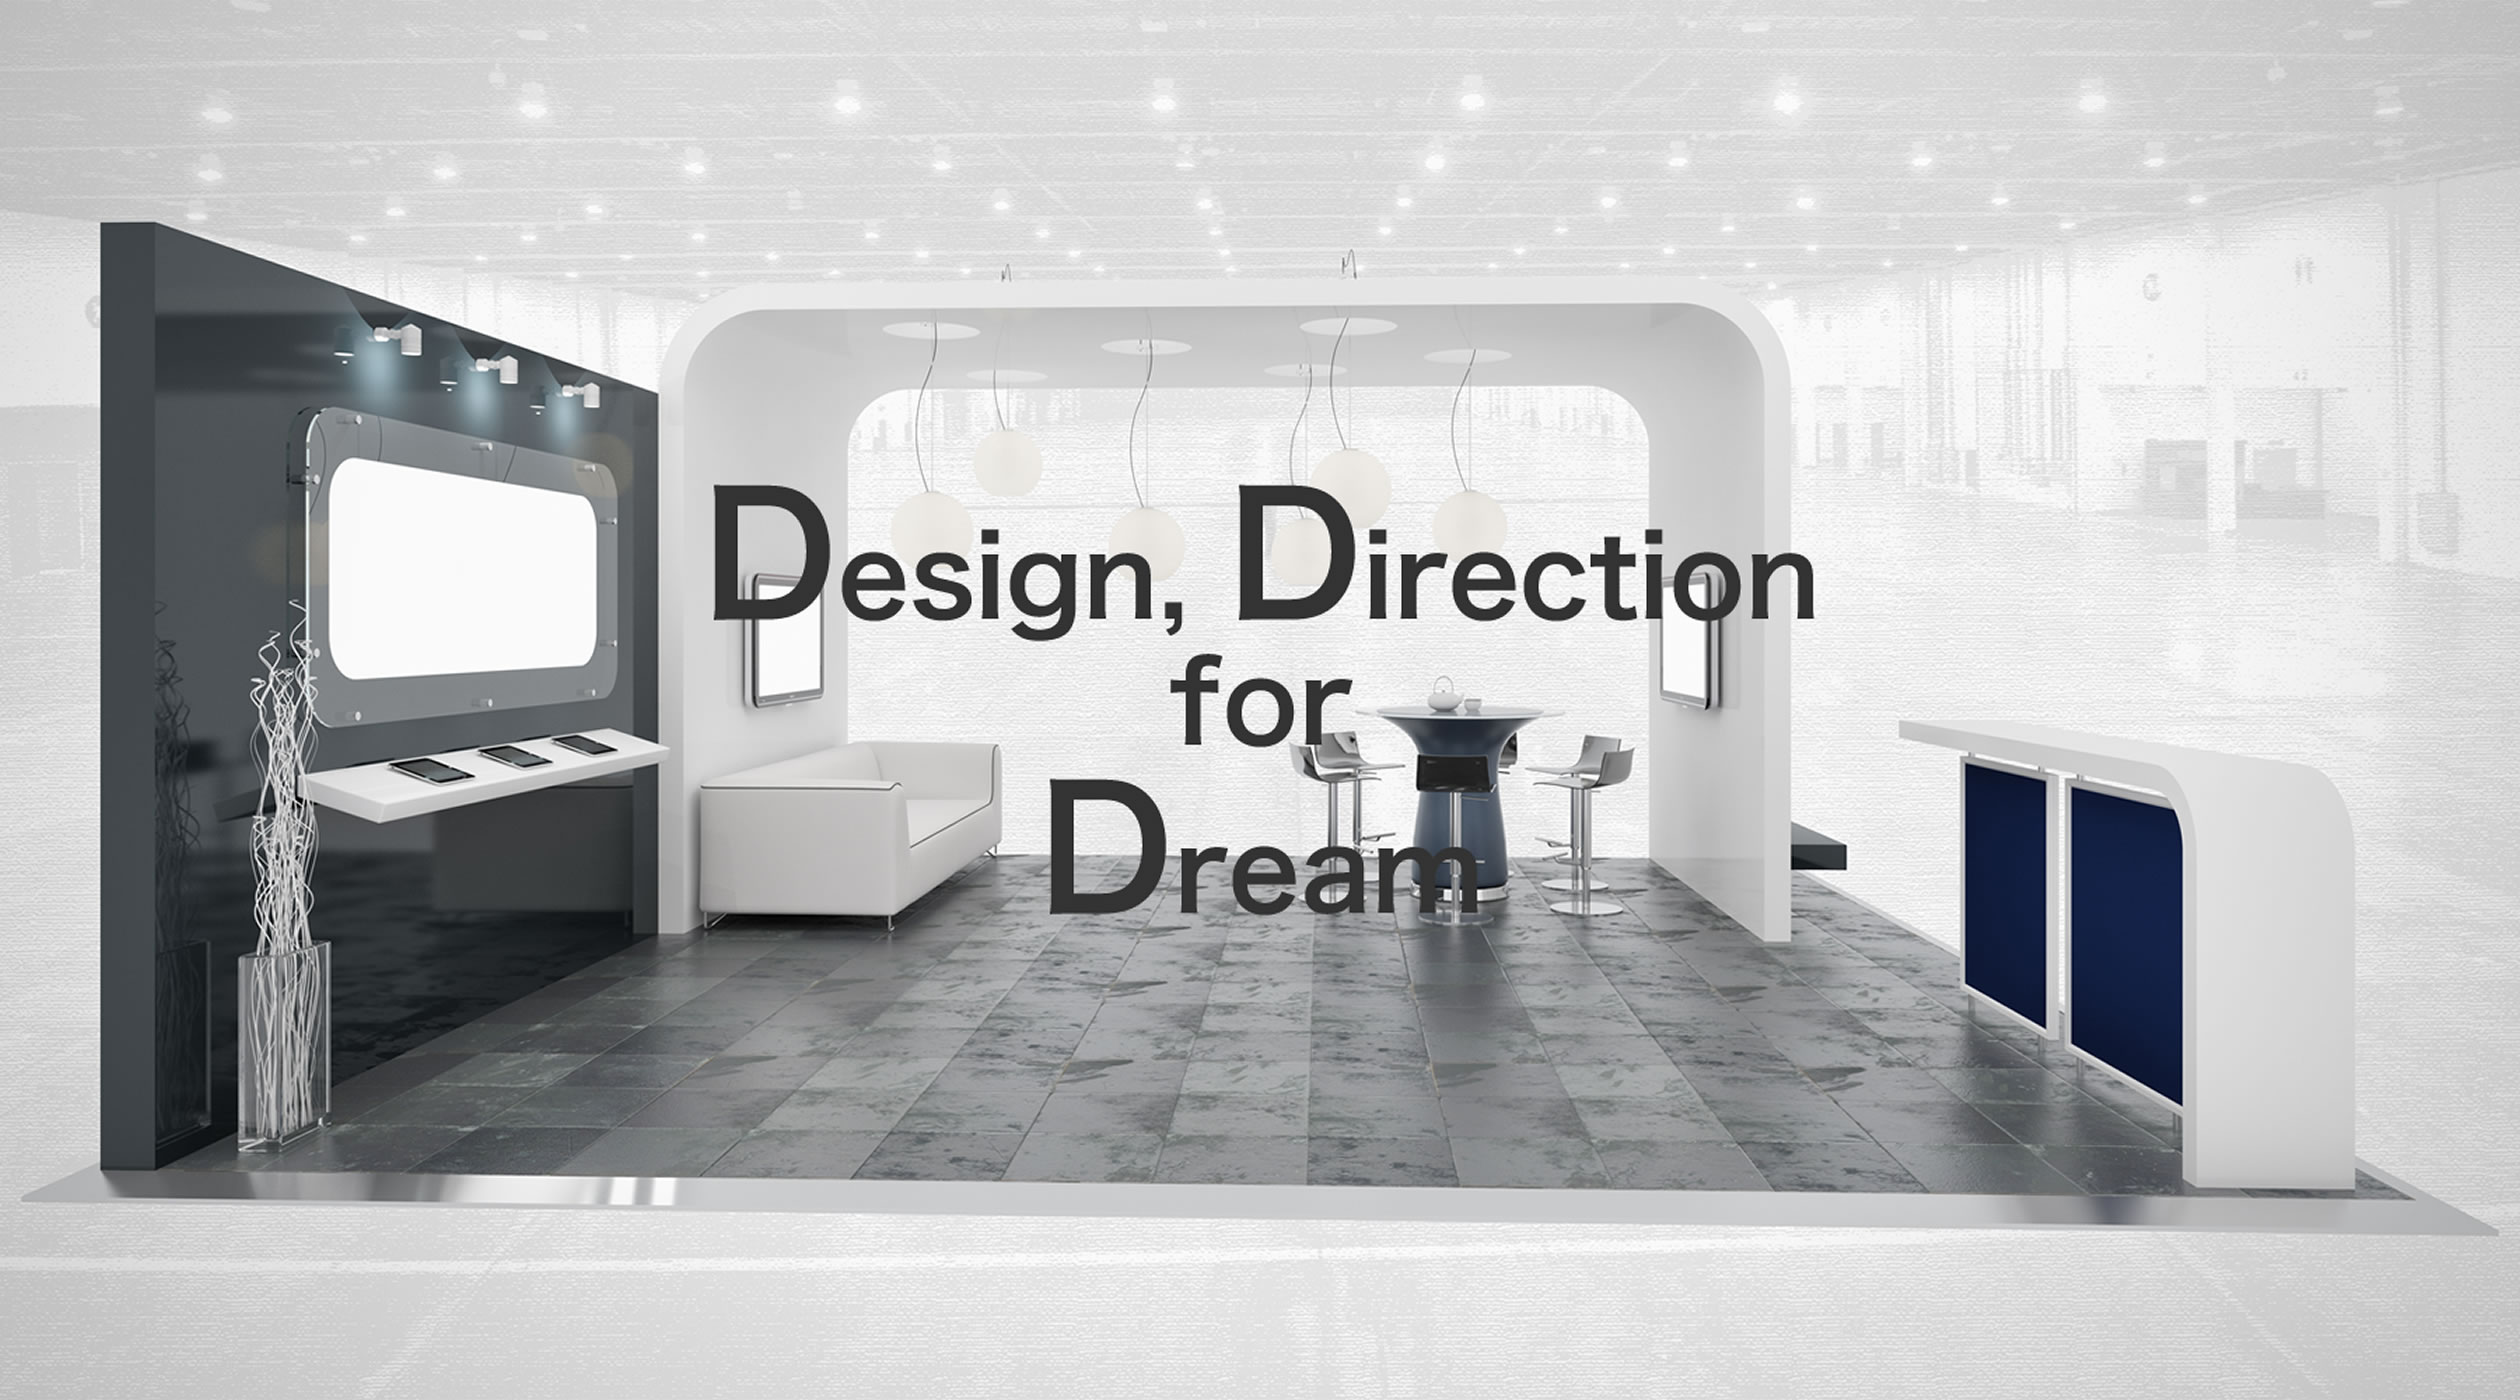 Design, Direction for Dream